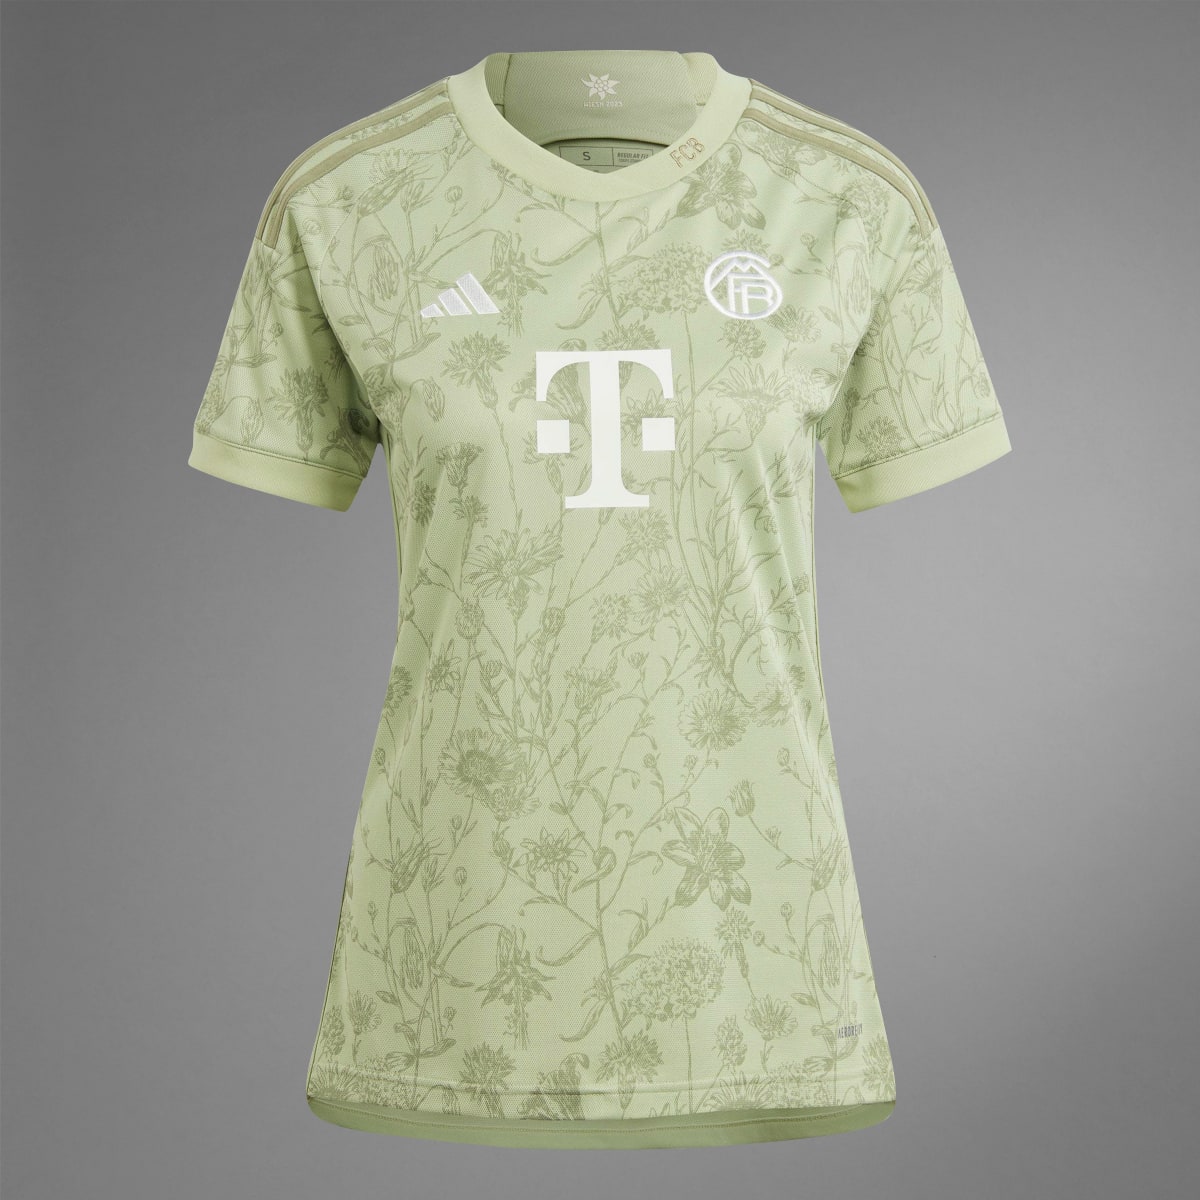 Adidas Camisola Wiesn do FC Bayern München. 10